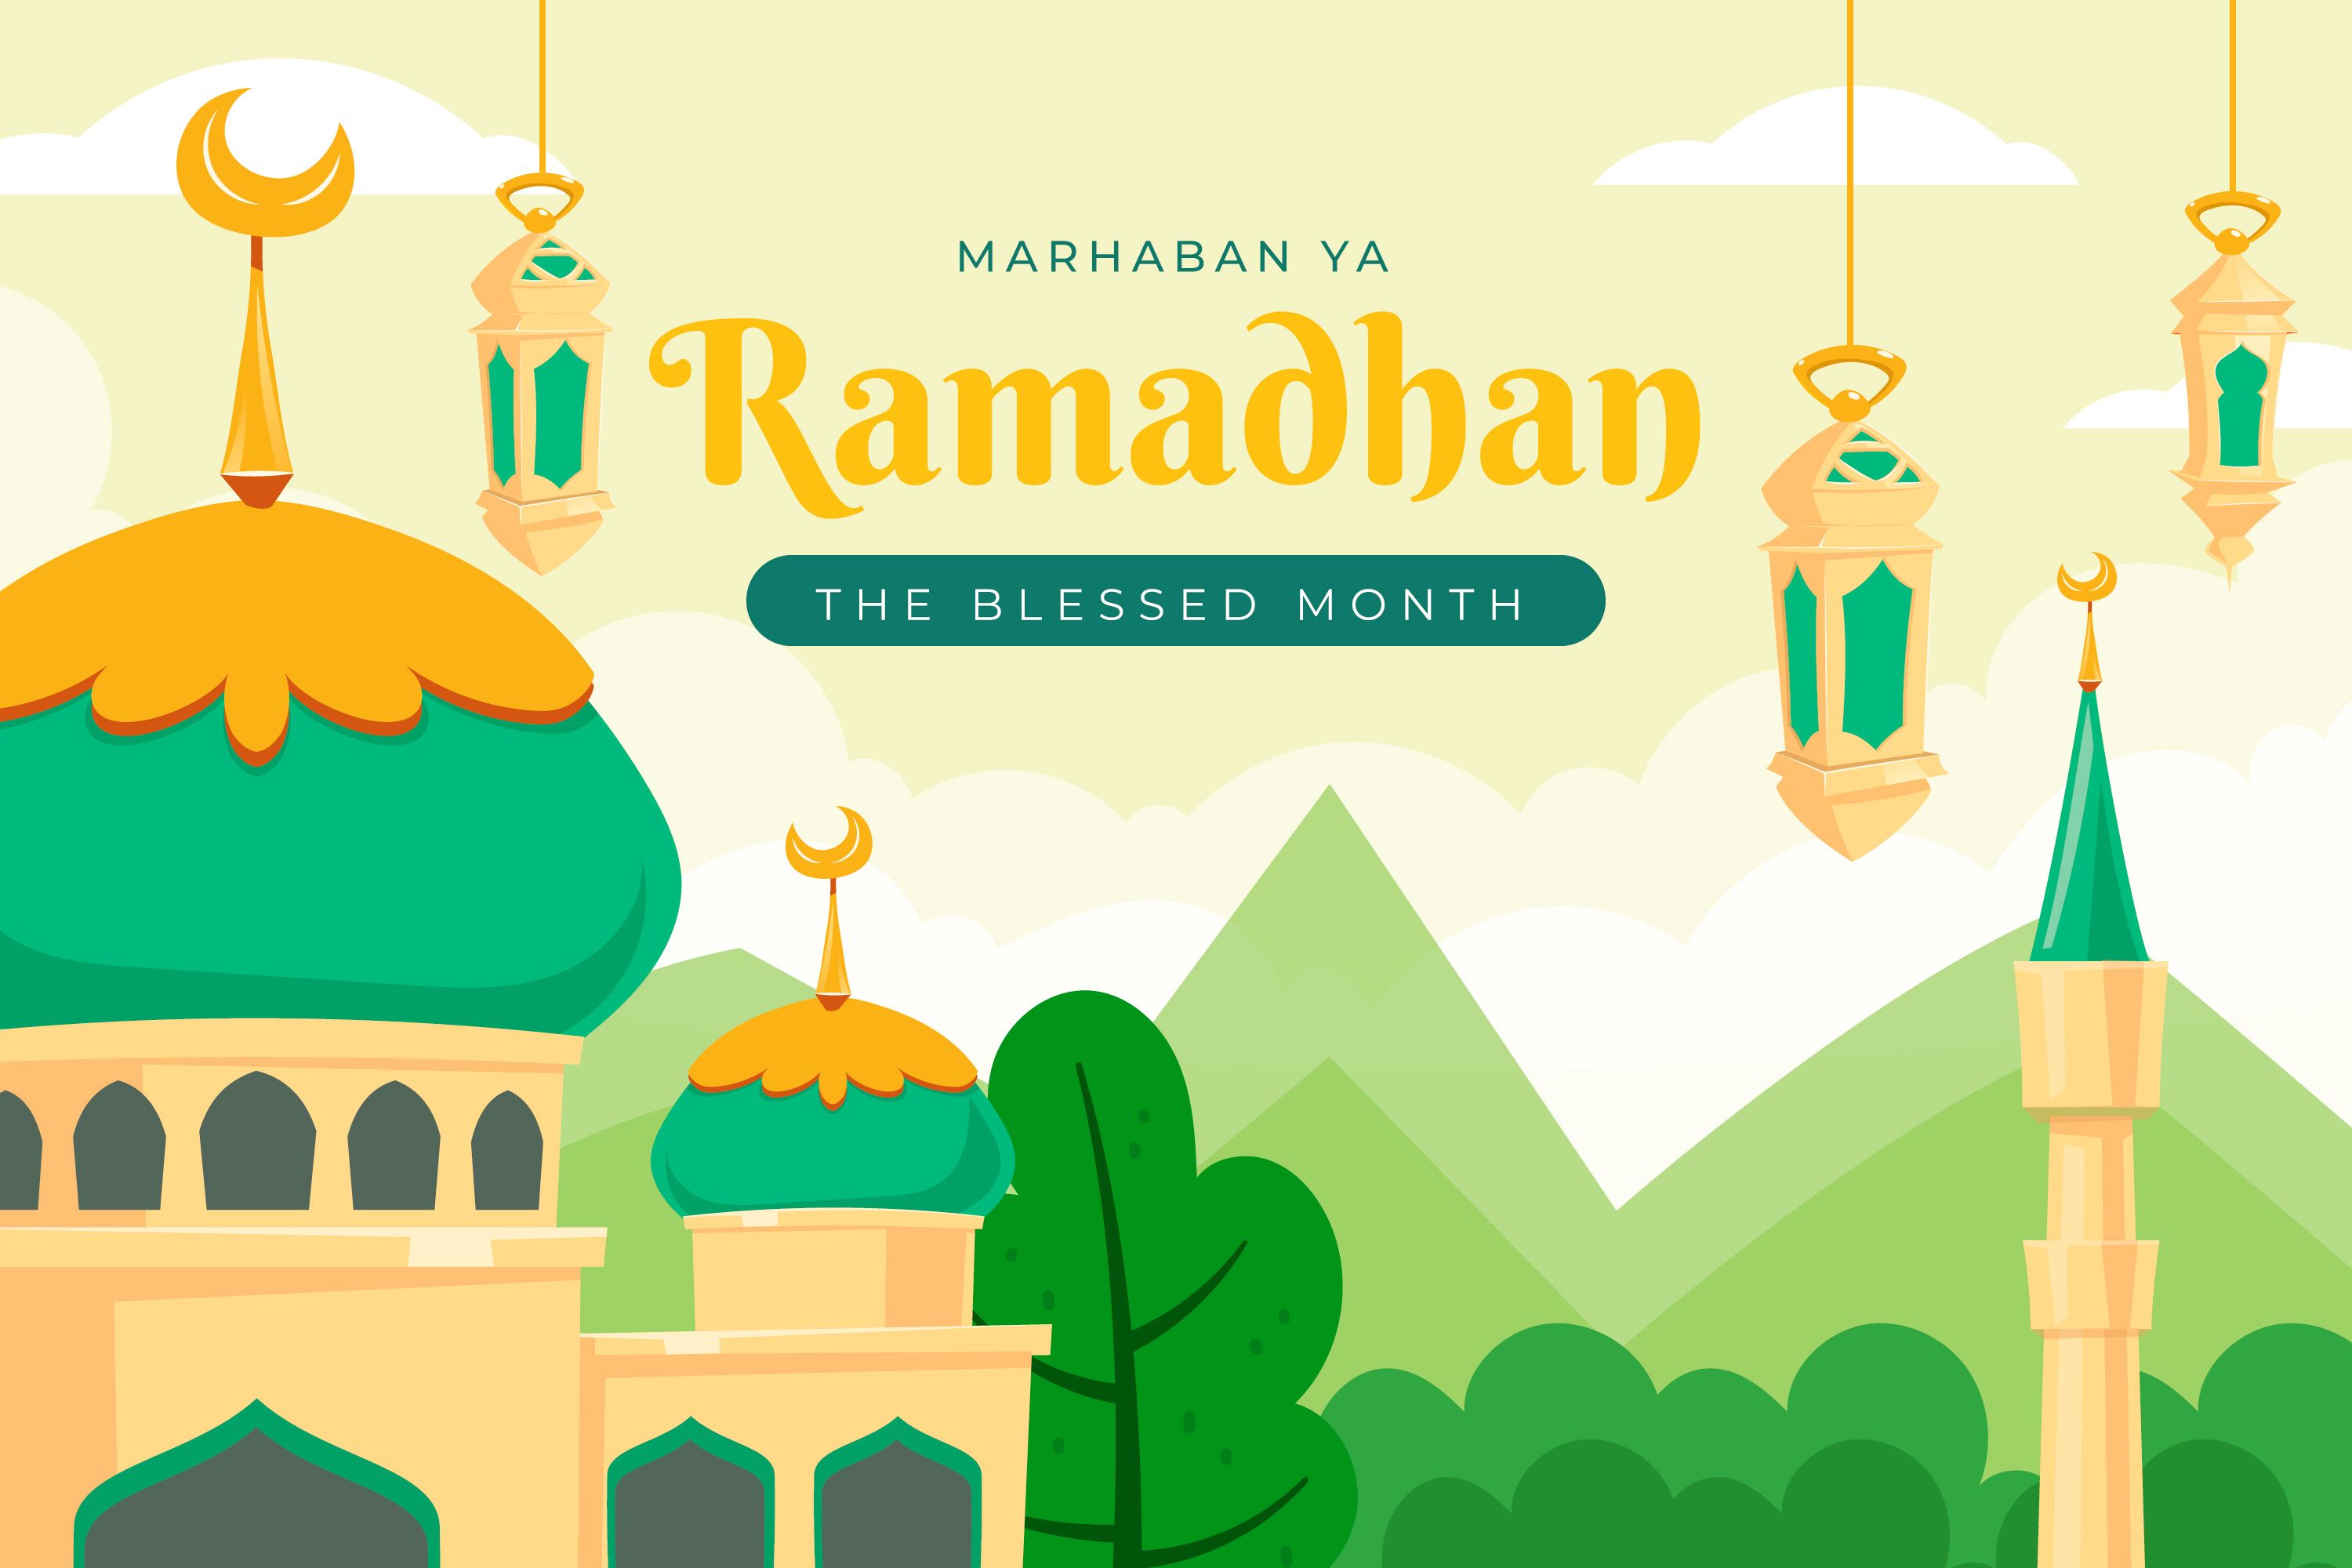 Kumpulan link gambar ucapan Marhaban ya Ramadhan gratis lengkap cara buat poster dan caption foto. 